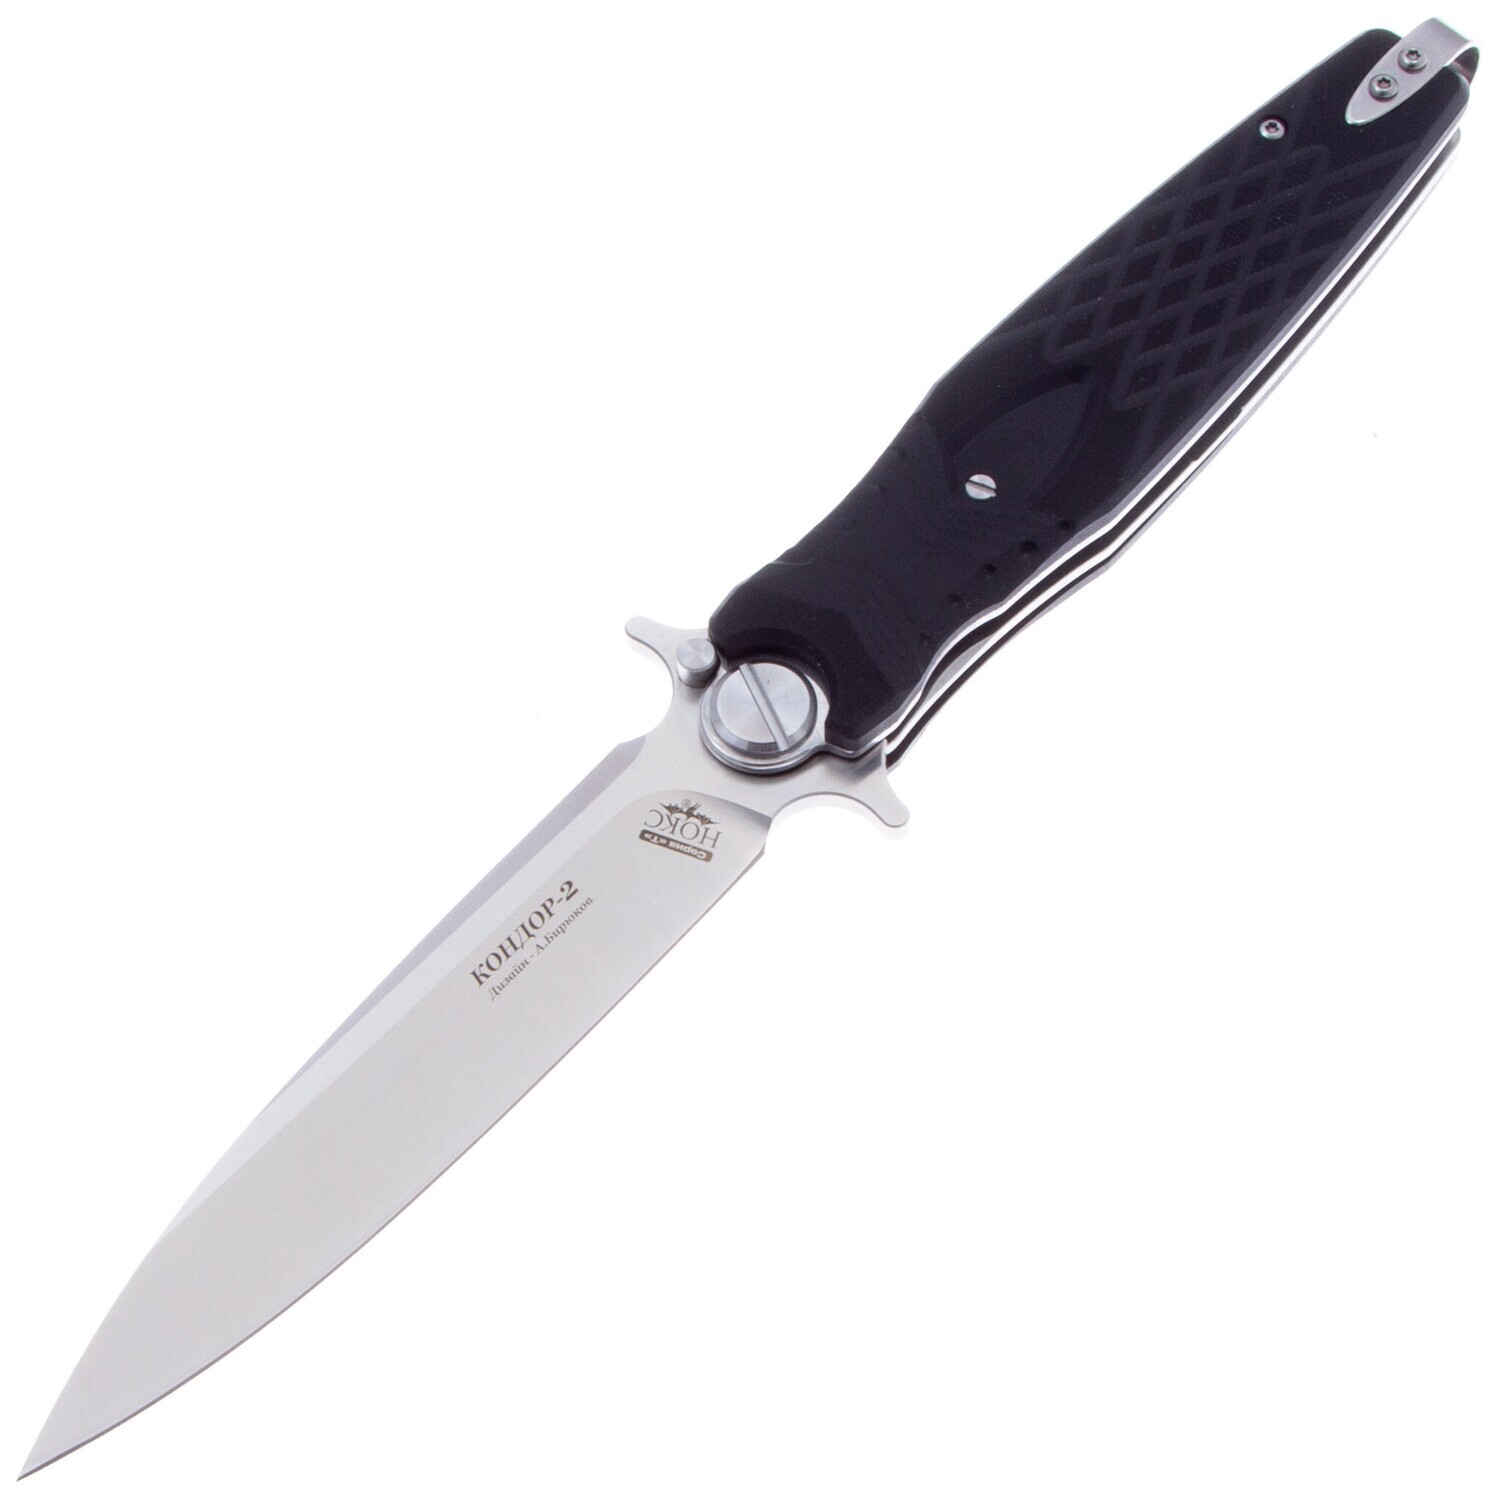 NOKS Condor knife model 2 Black D2